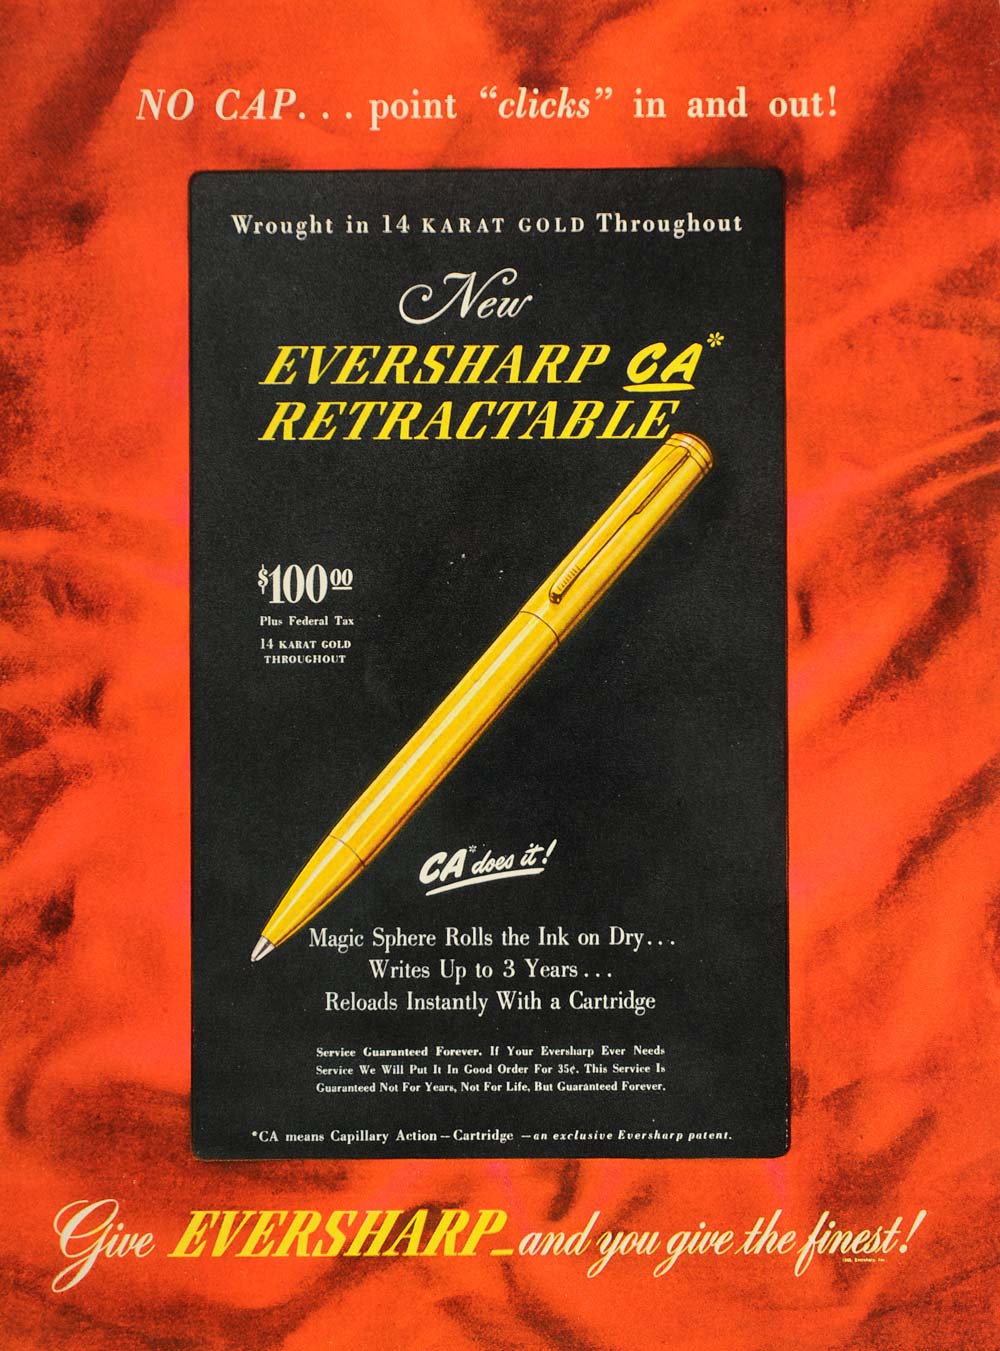 1946 Ad Eversharp Cartridge Retractable Ball Point Pen - ORIGINAL TM1